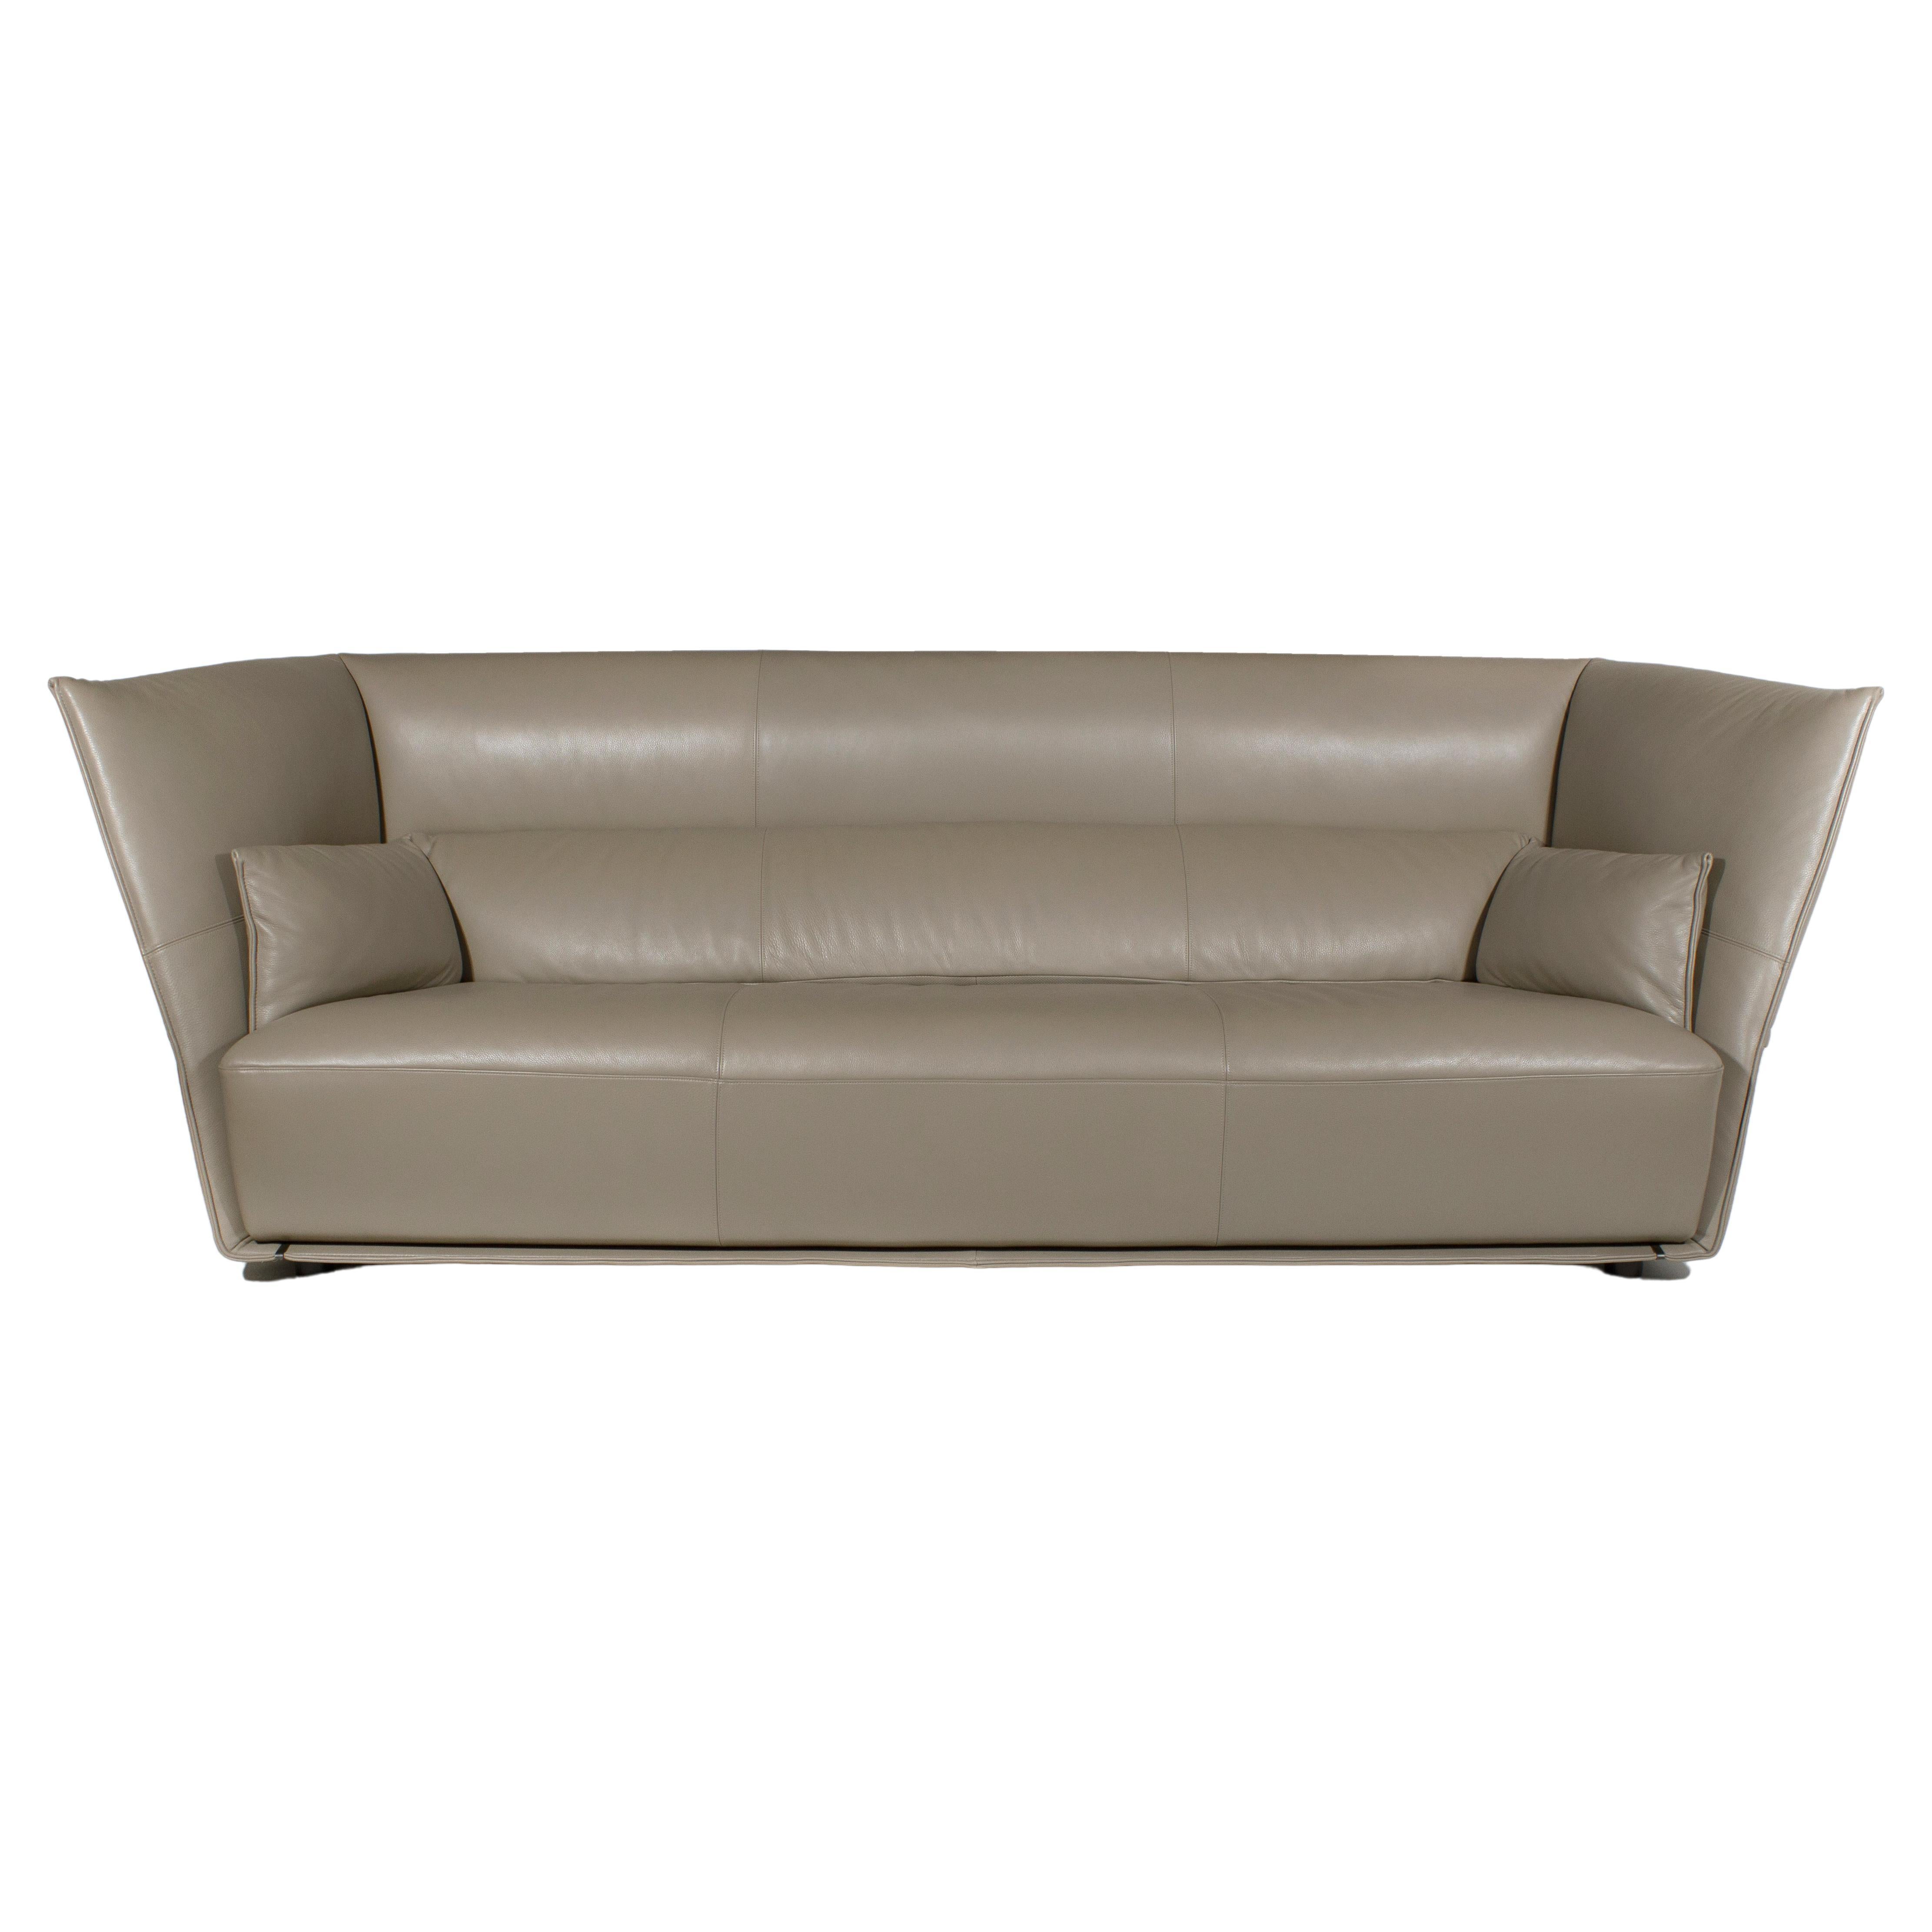 Paltrona Frau 'Almo' Modern Leather Sofa Designed by Garcia Cumini